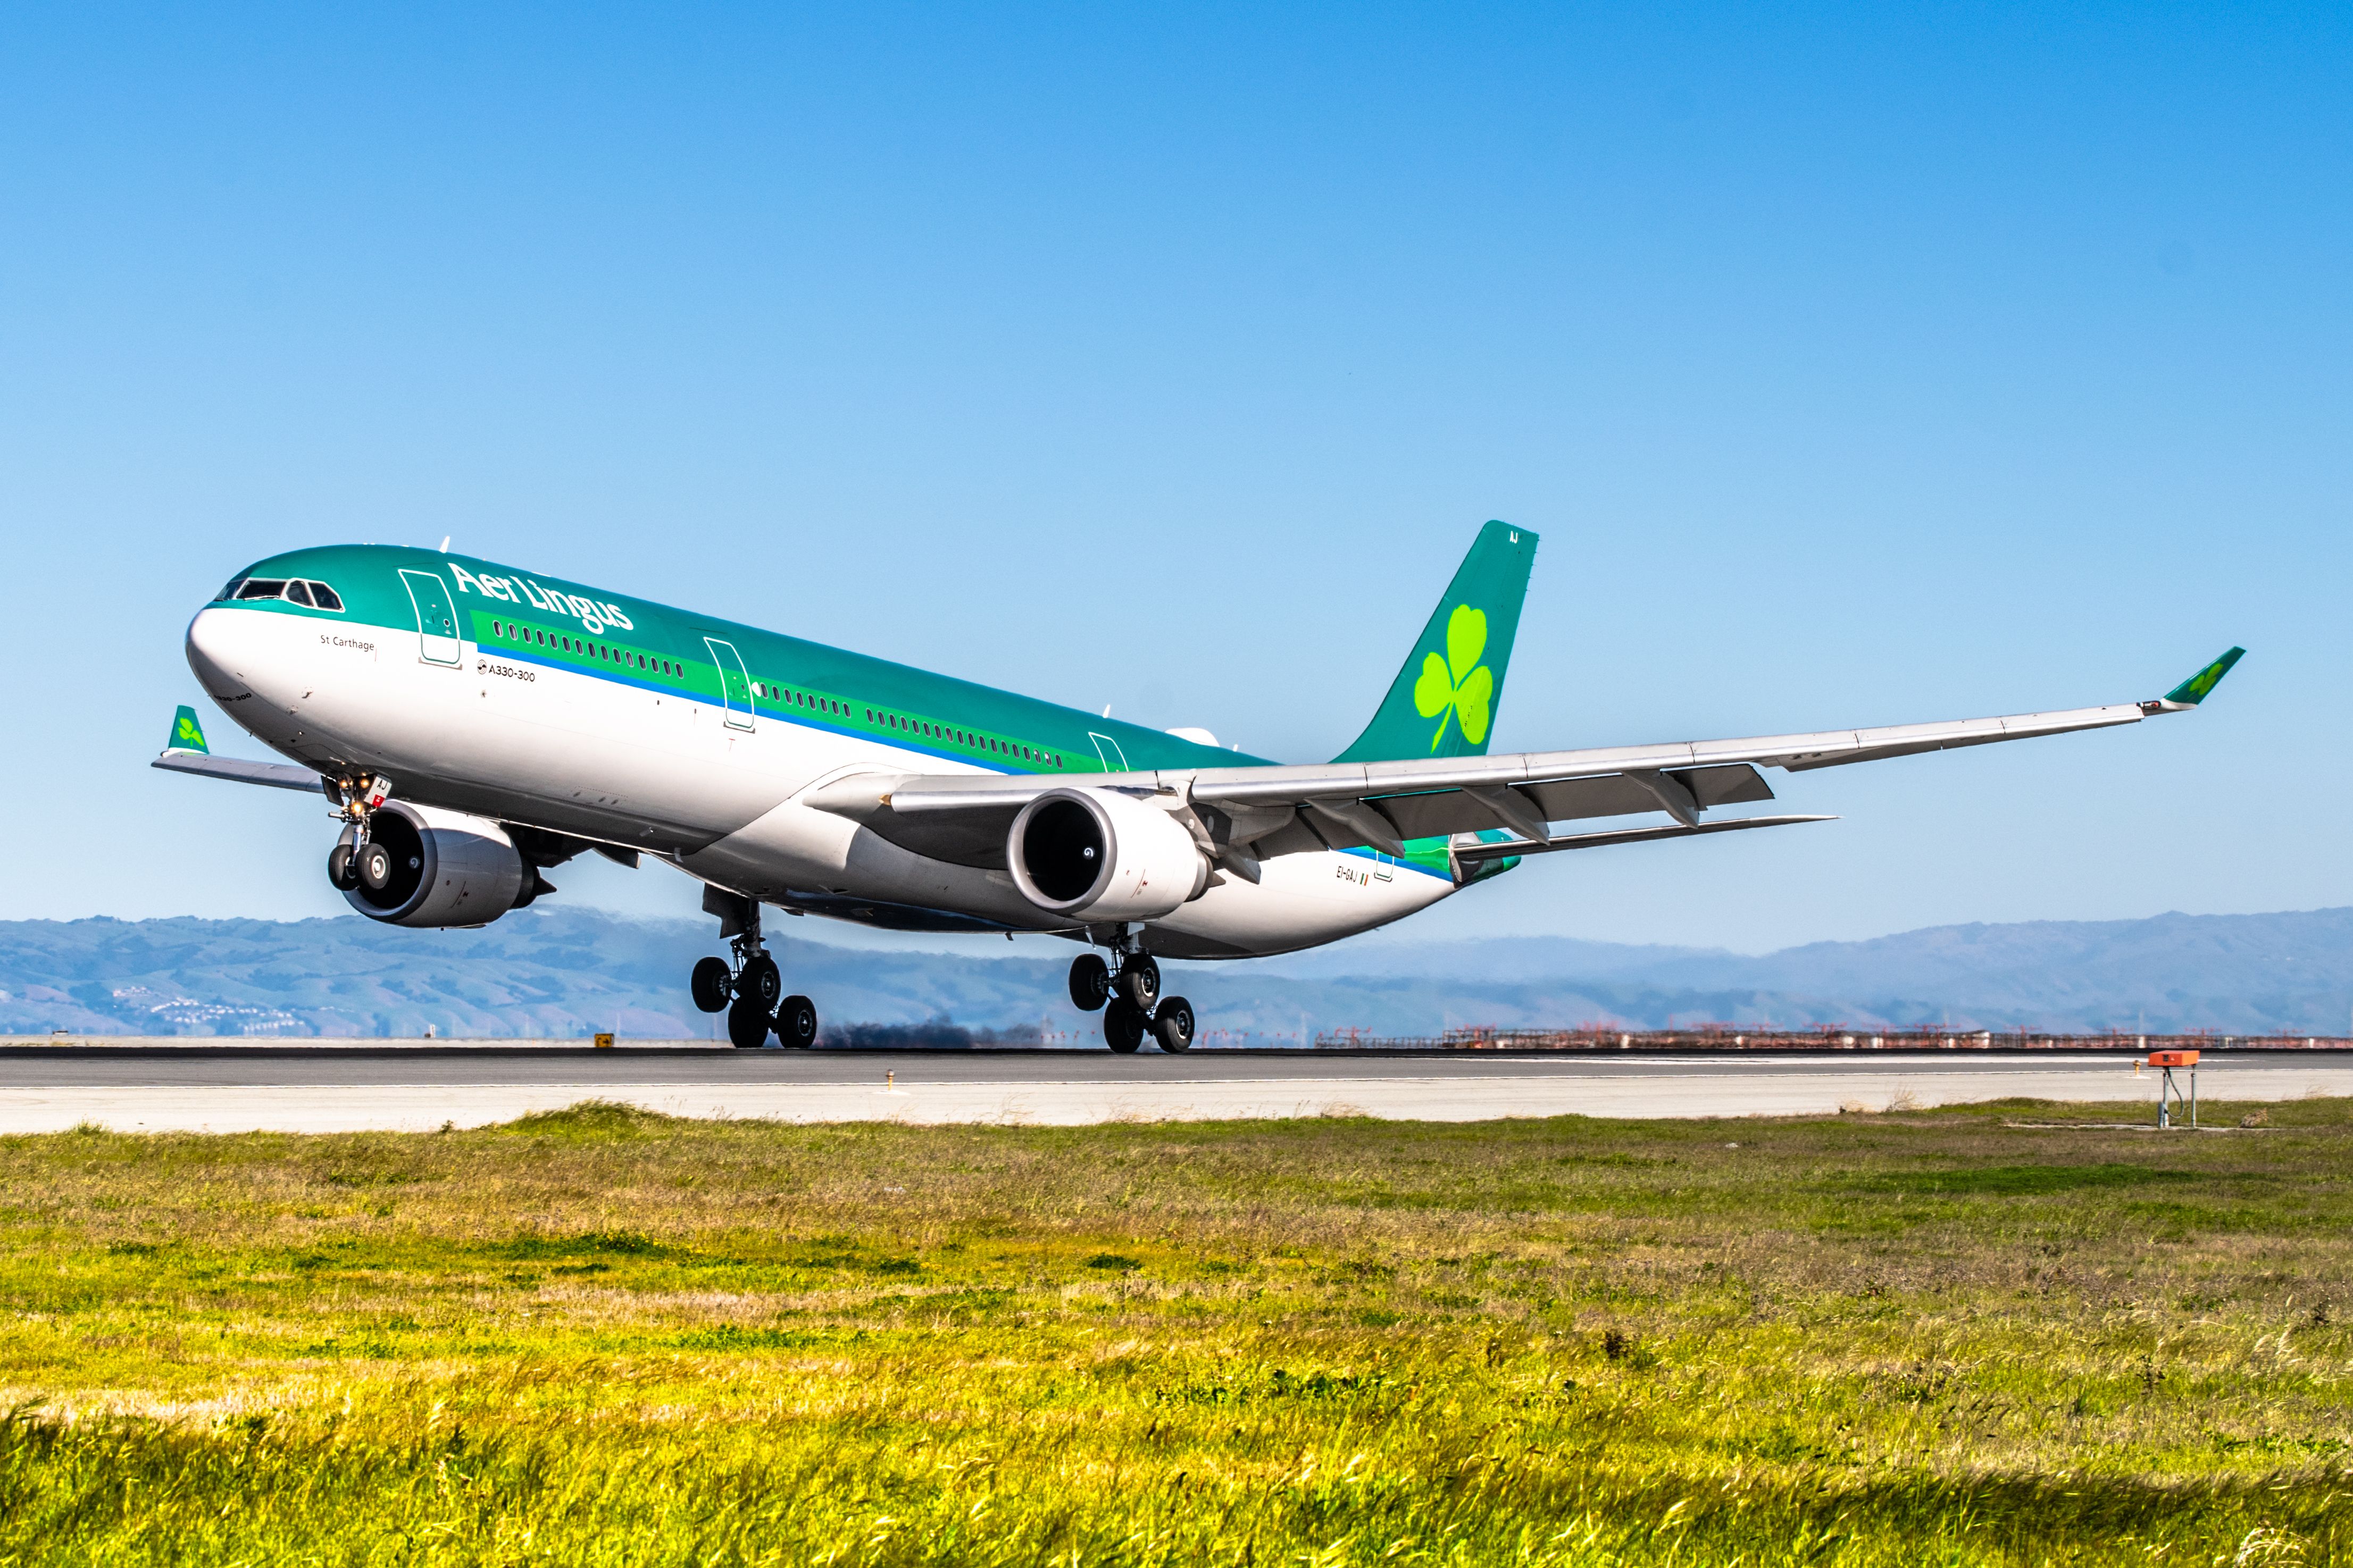 Aer Lingus' Airbus A330 Will Return To Miami Tomorrow Boosting IAG